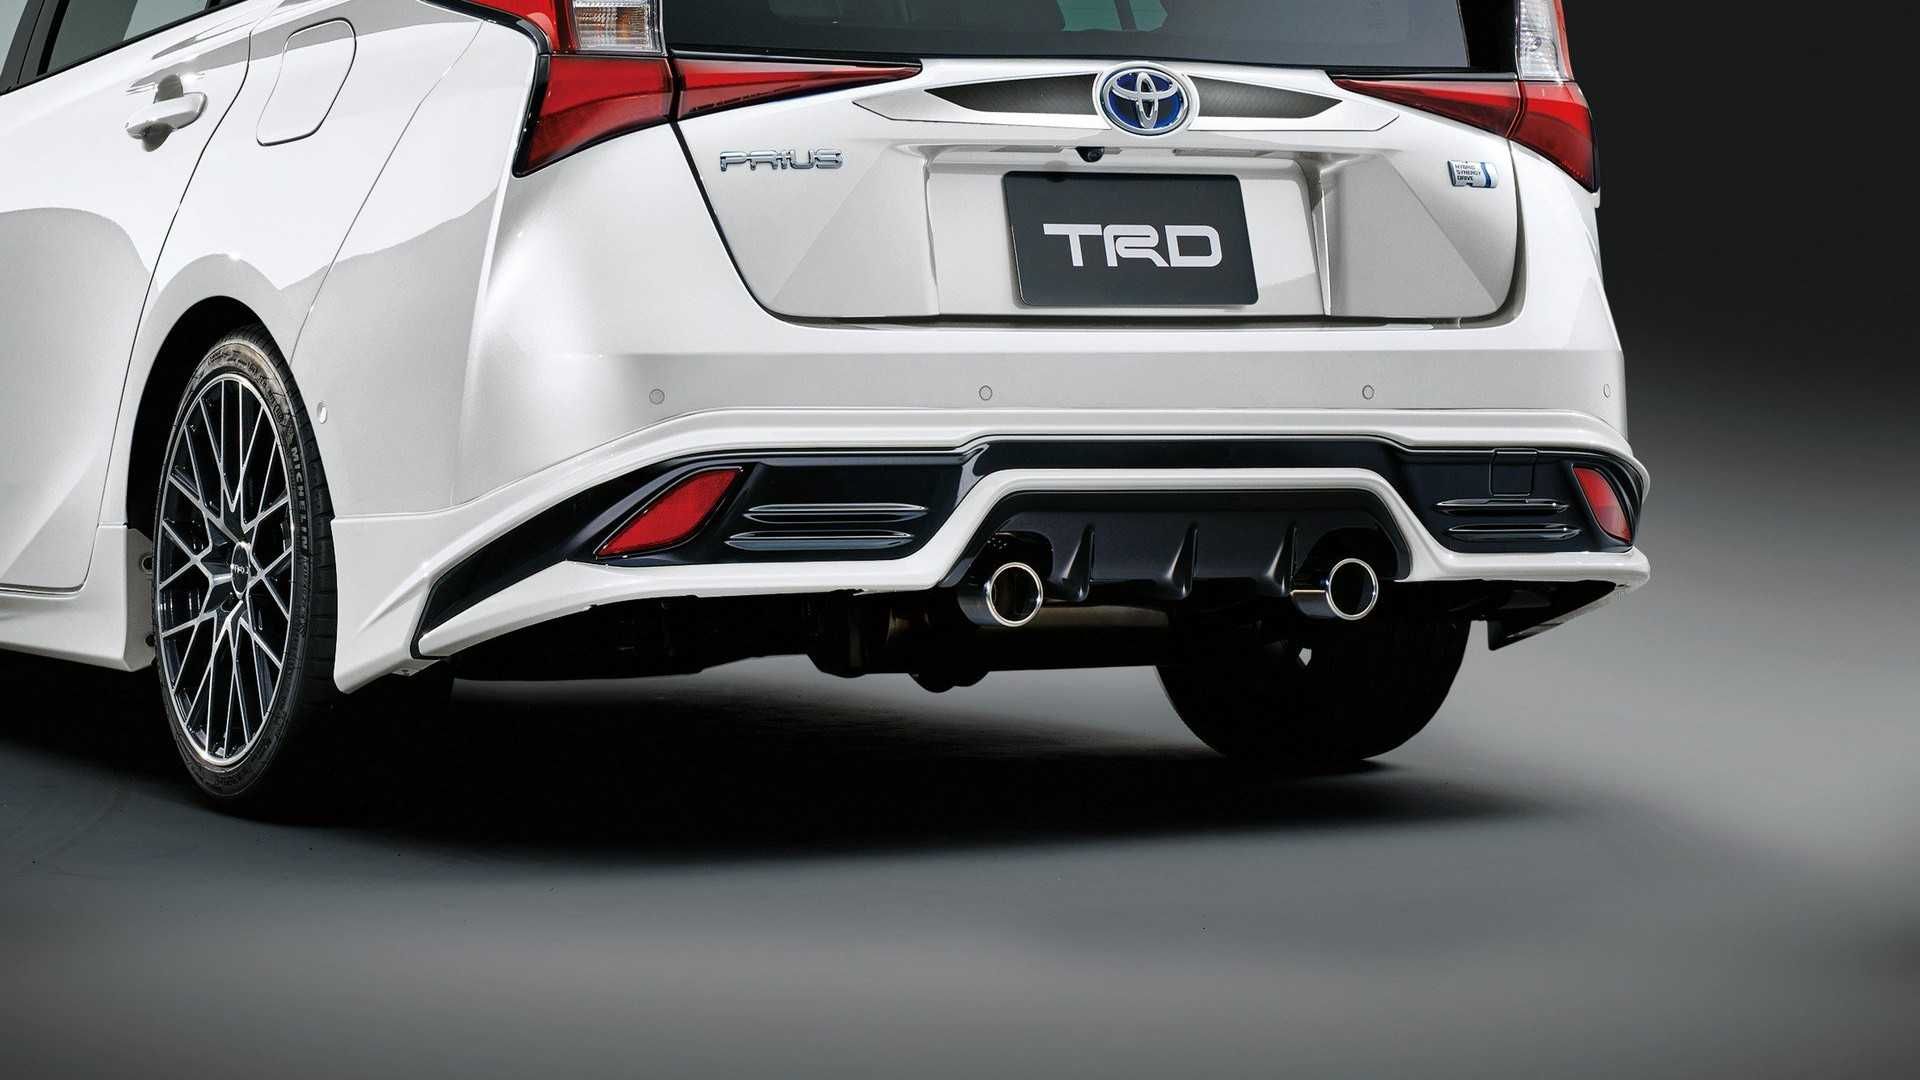 2019 Toyota Prius / تویوتا پریوس 2019